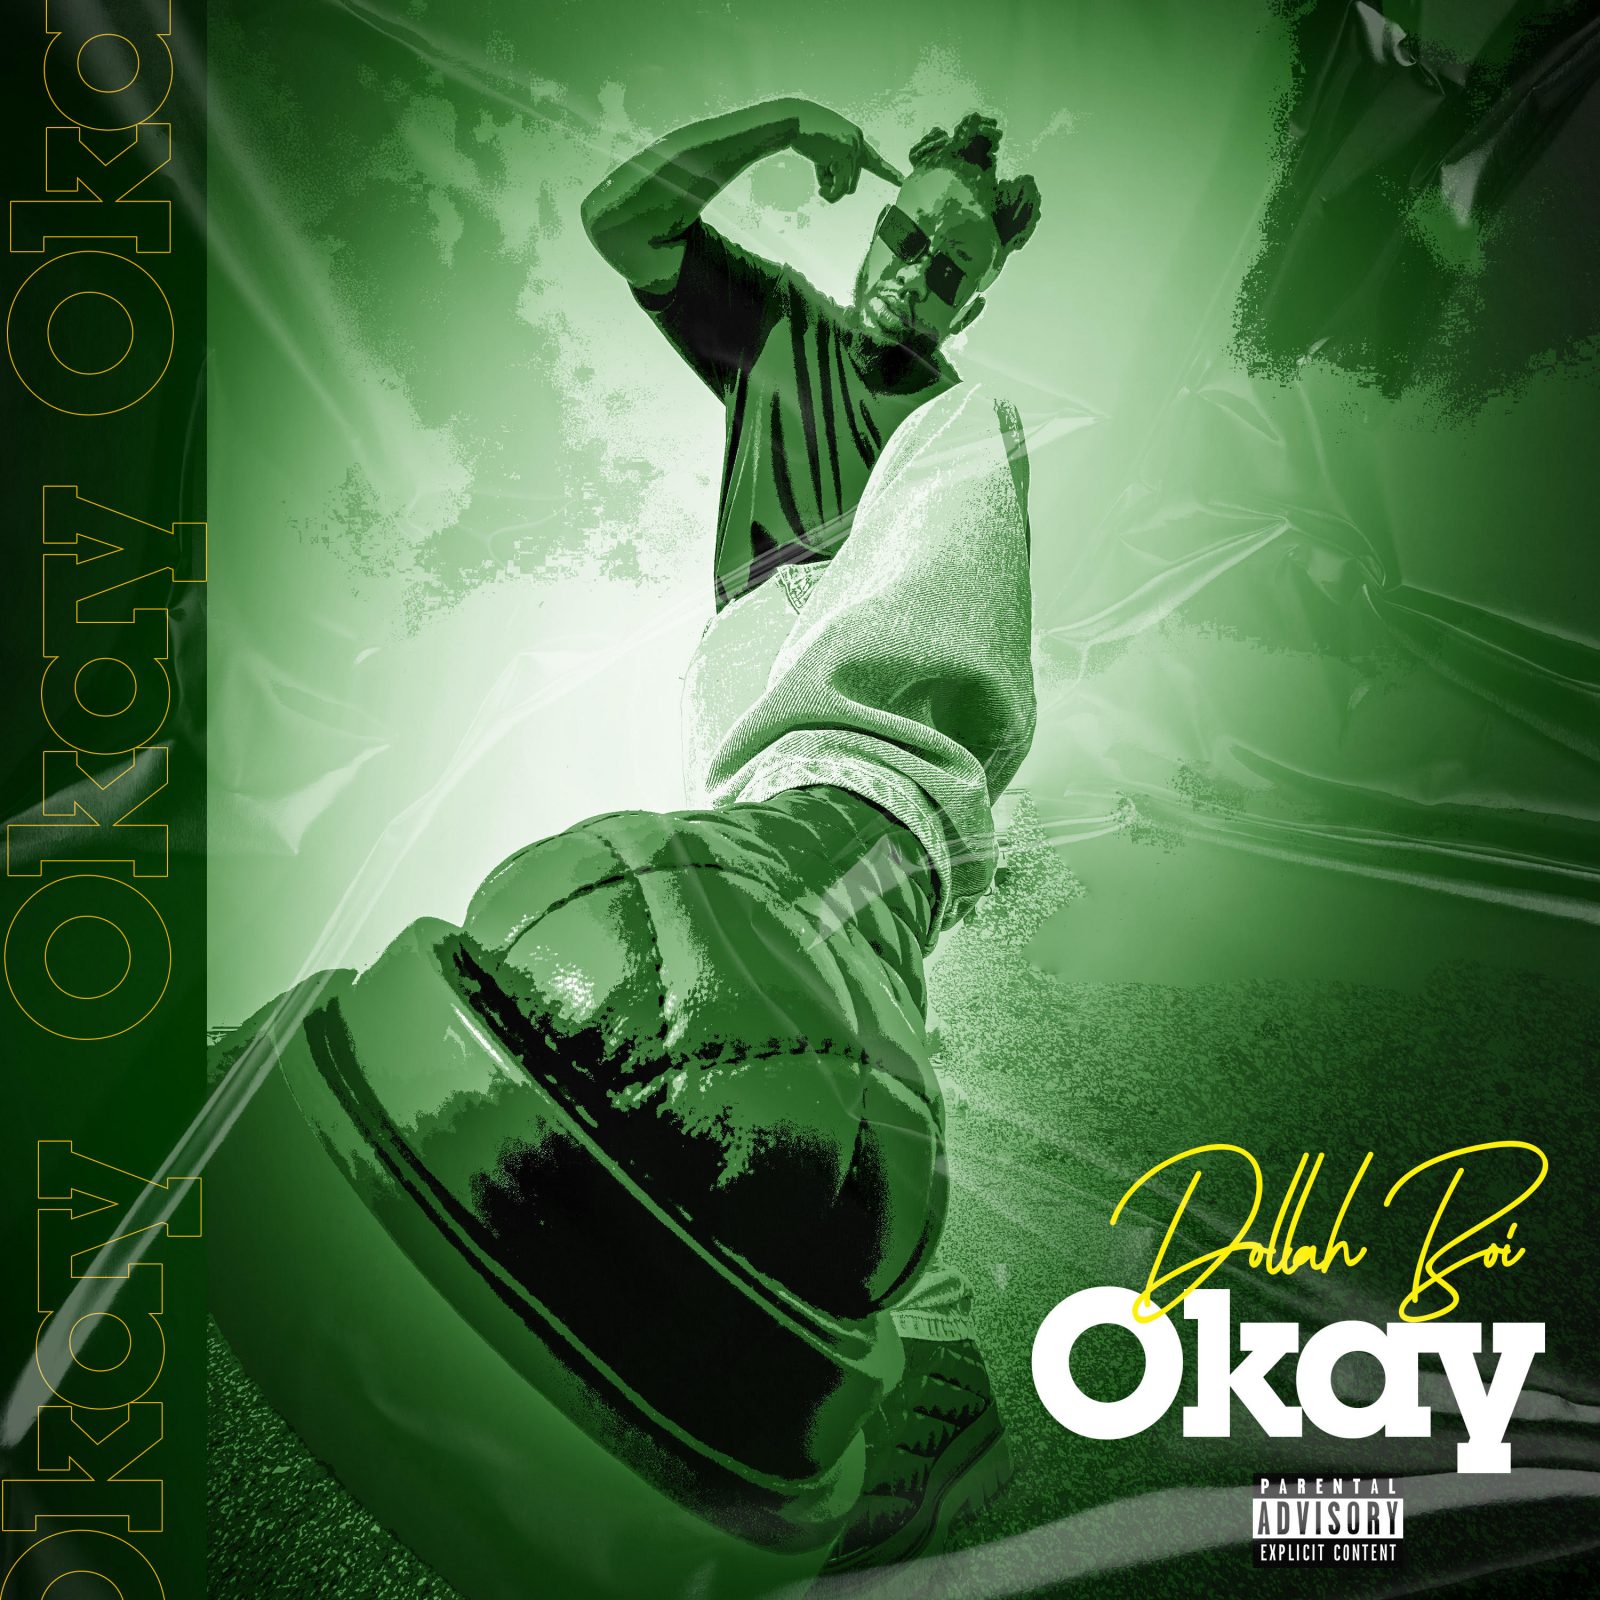 New Music Alert - Okay by Dollah Boi CD Cover